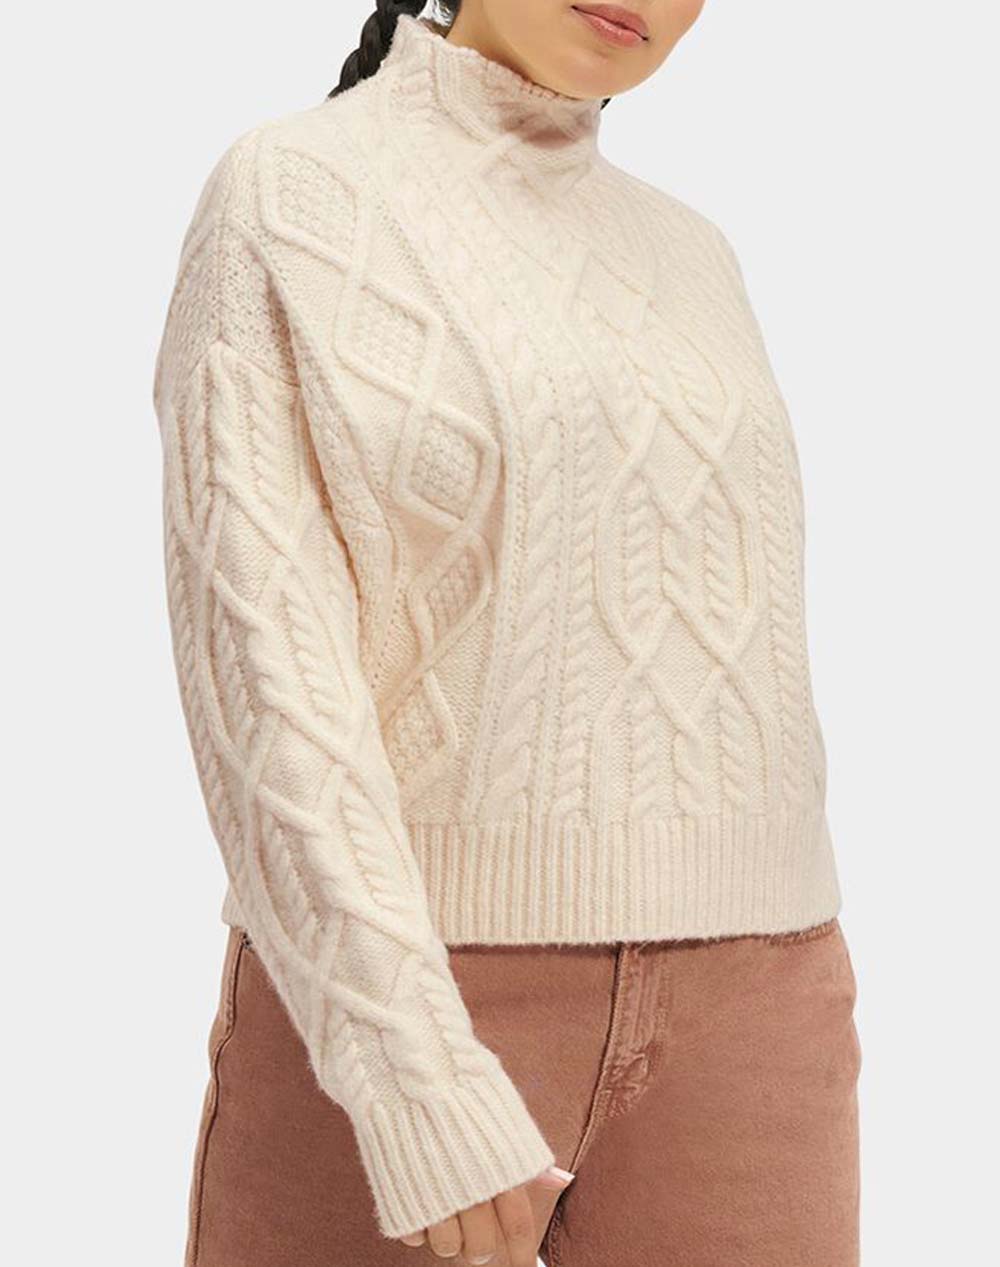 UGG Janae Cable Knit Sweater Short 1131508-00E2 Cream